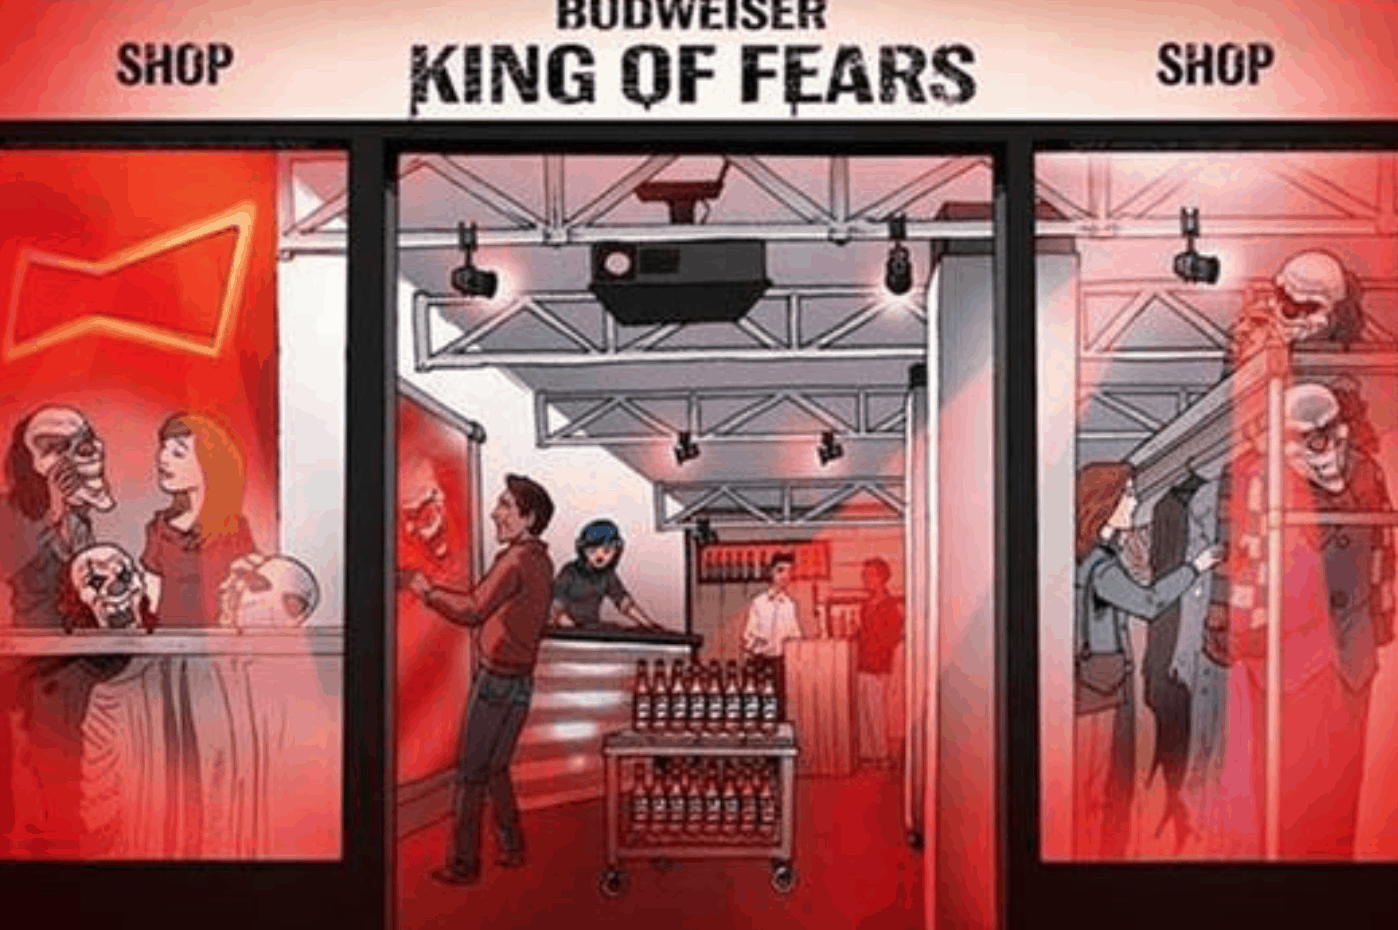 Budweiser's King of Fears pop-up Halloween stunts